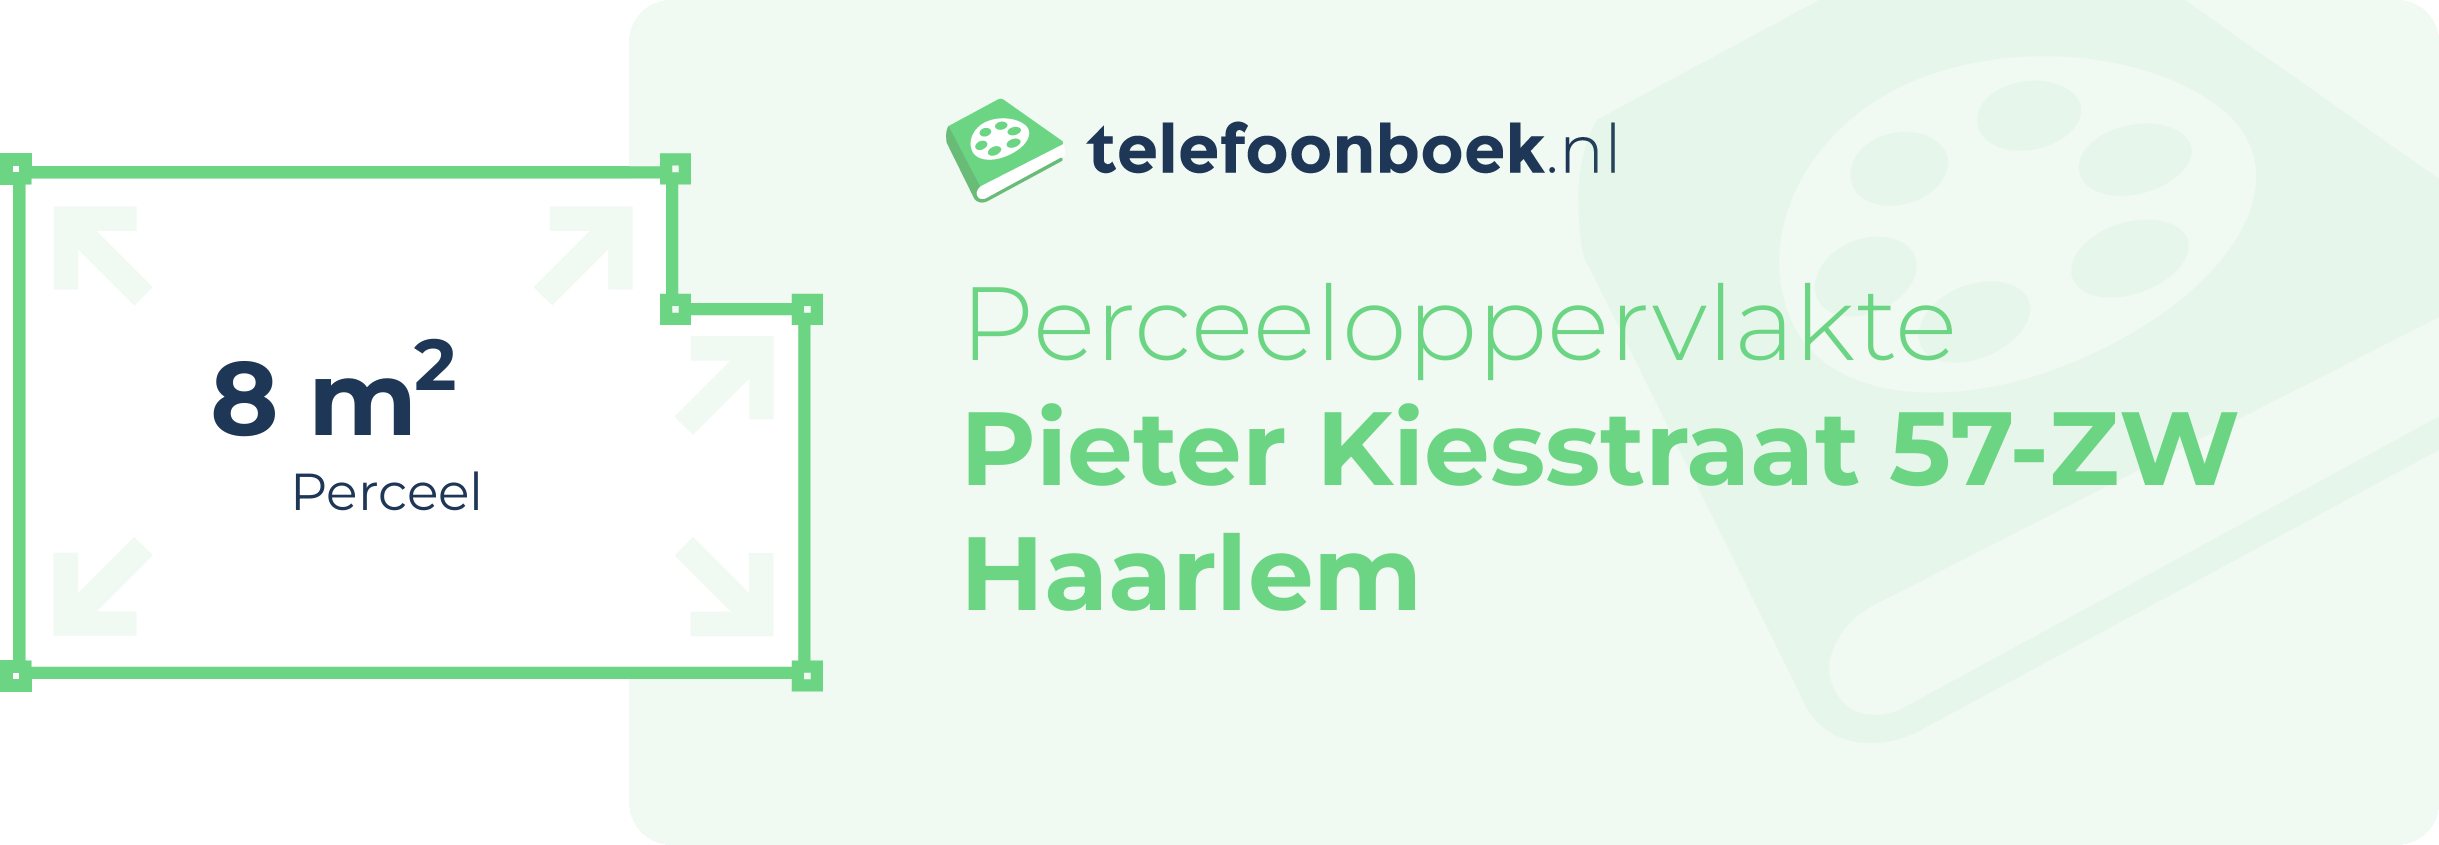 Perceeloppervlakte Pieter Kiesstraat 57-ZW Haarlem